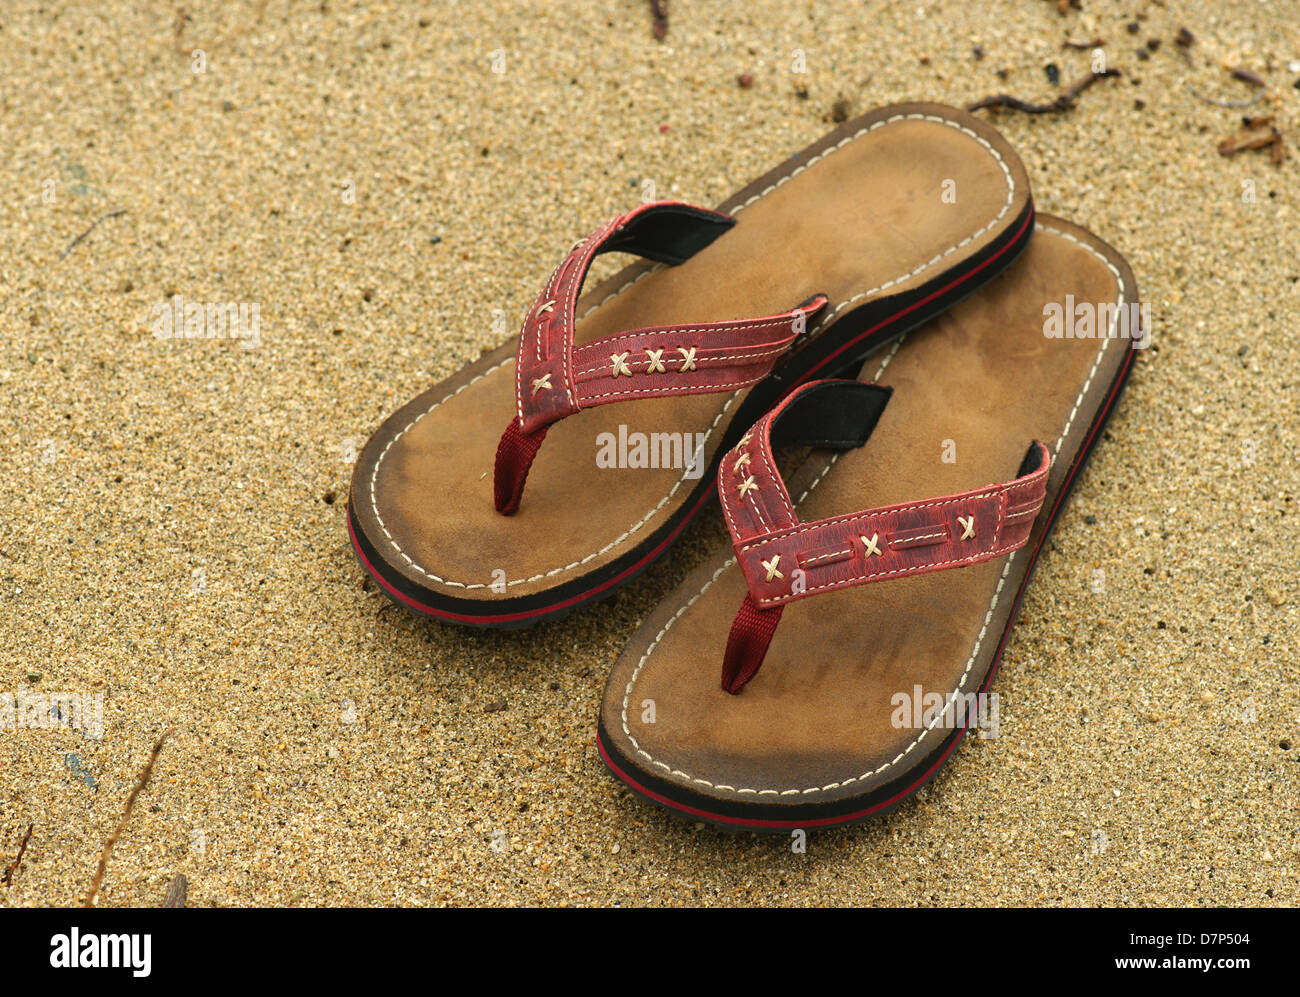 Flip flops left on a sandy beach. Stock Photo